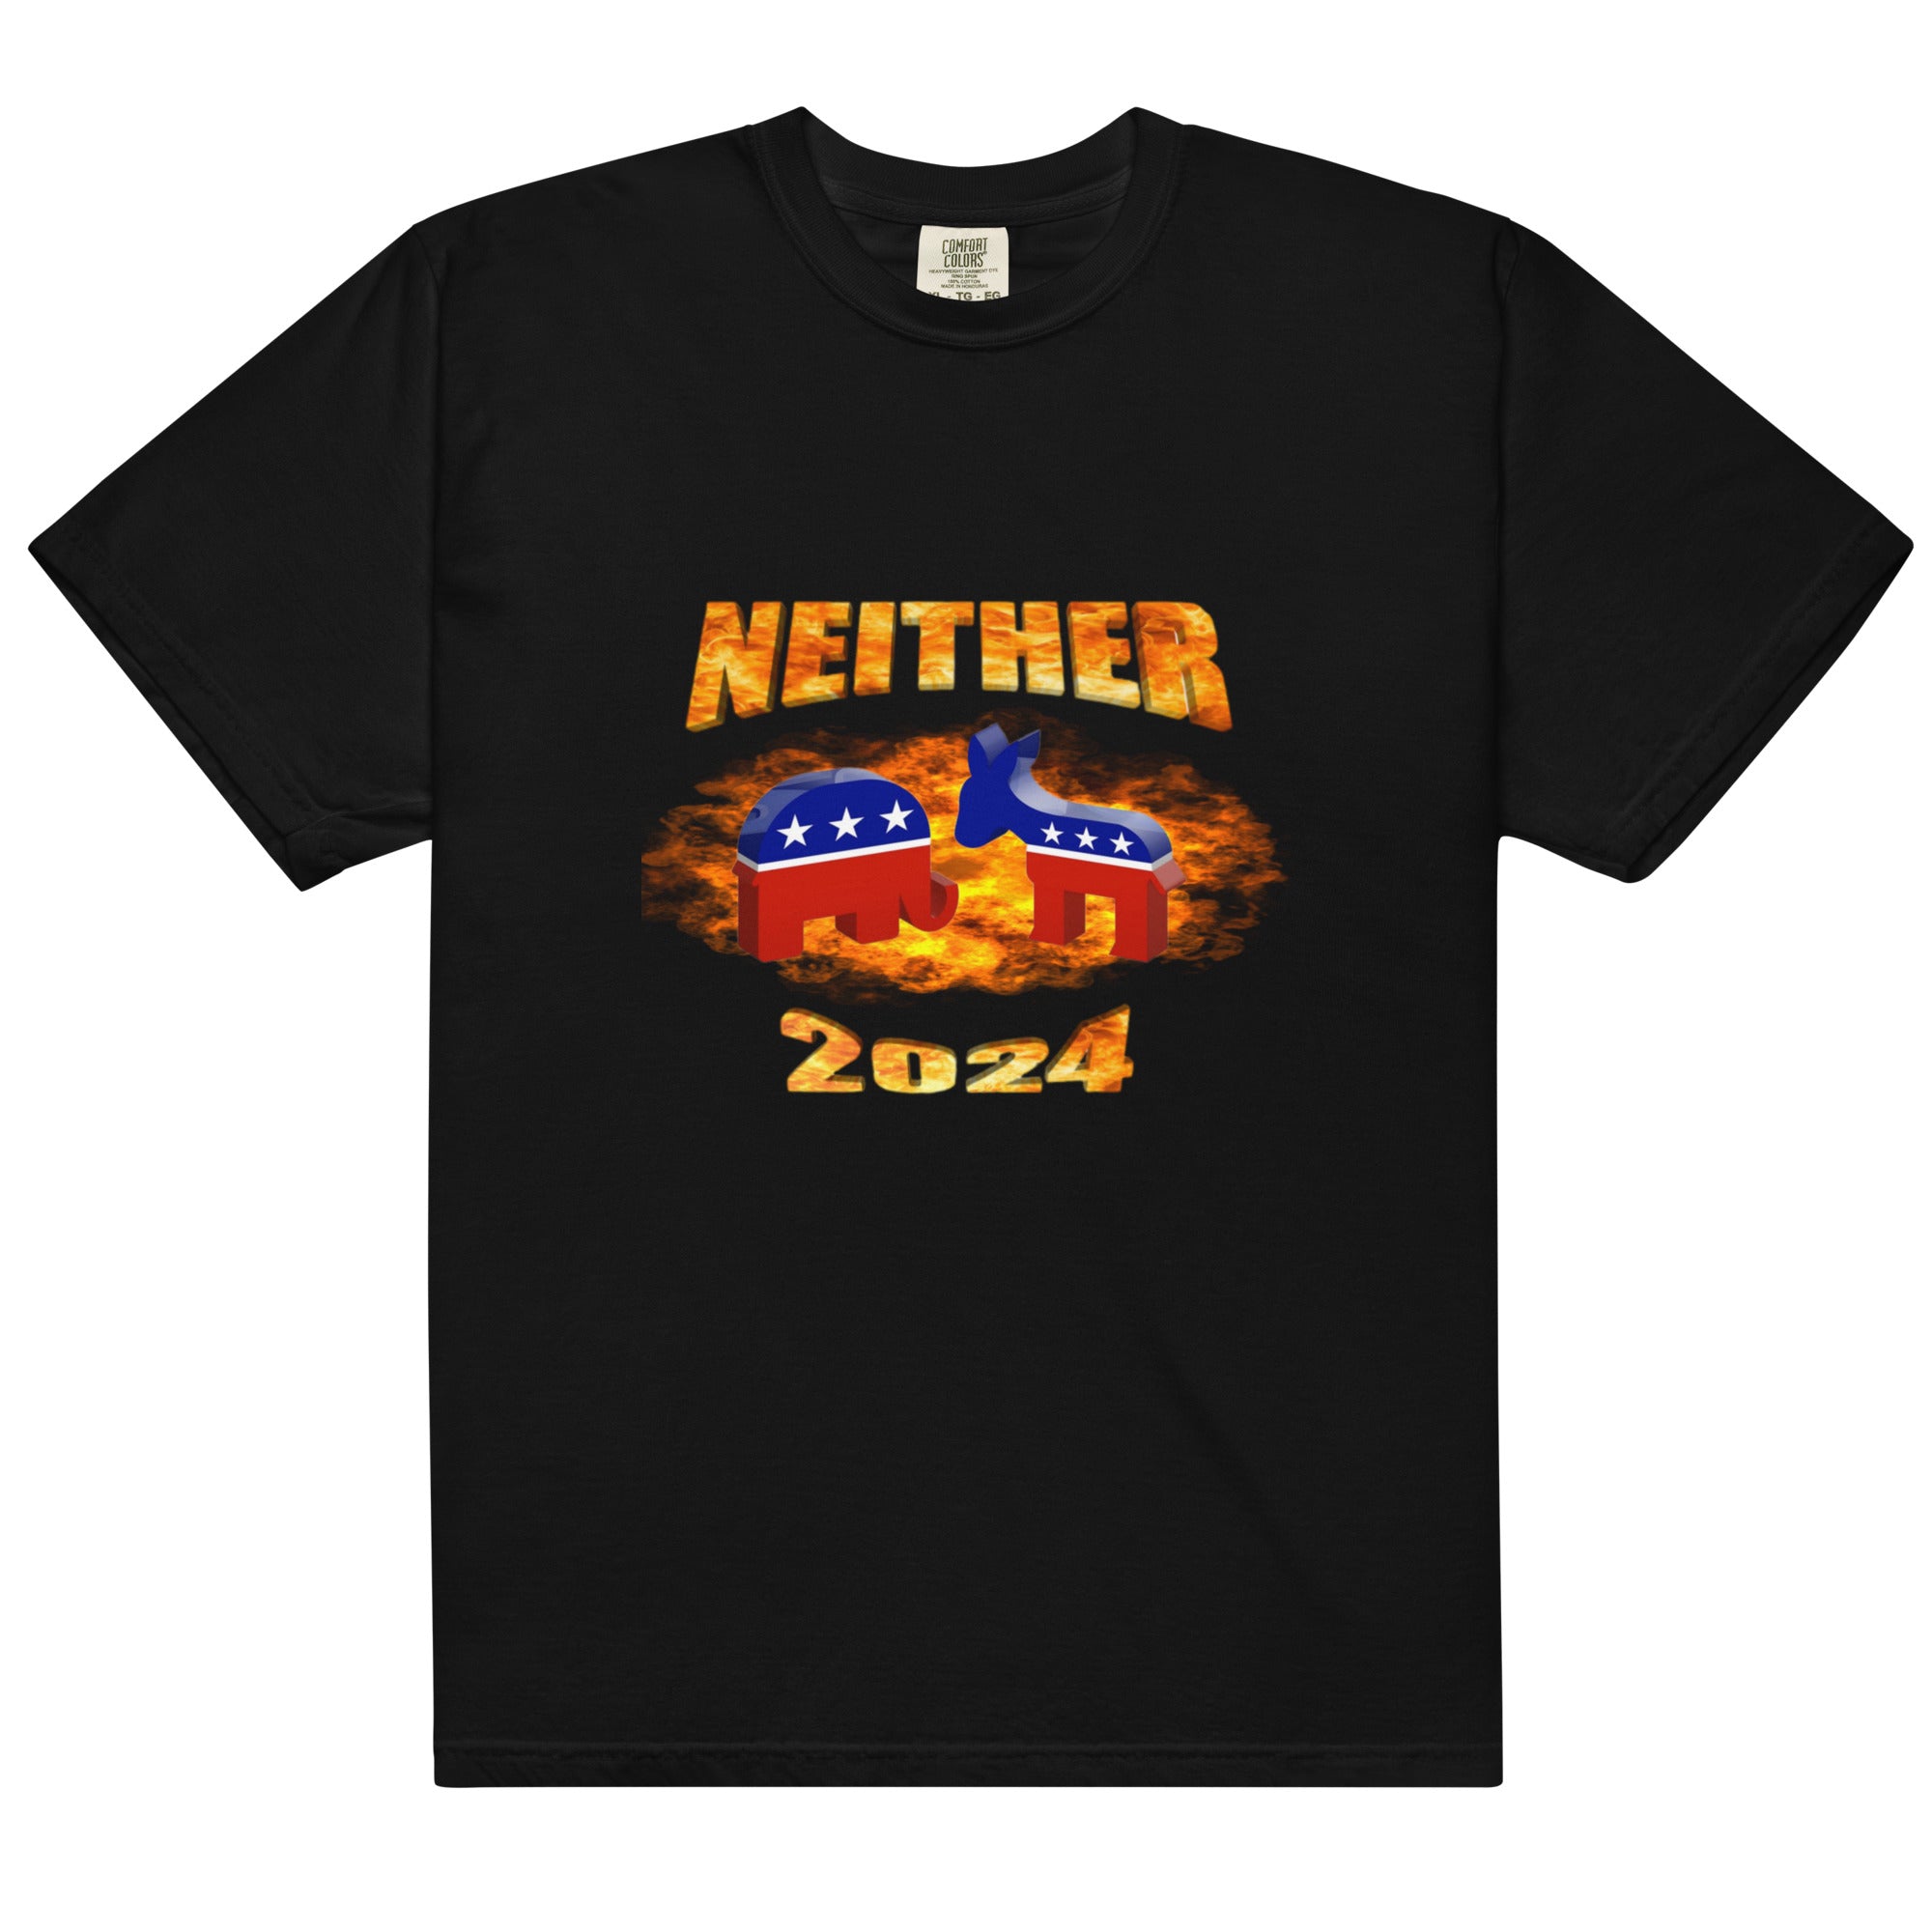 Neither 2024 Flames Shirt